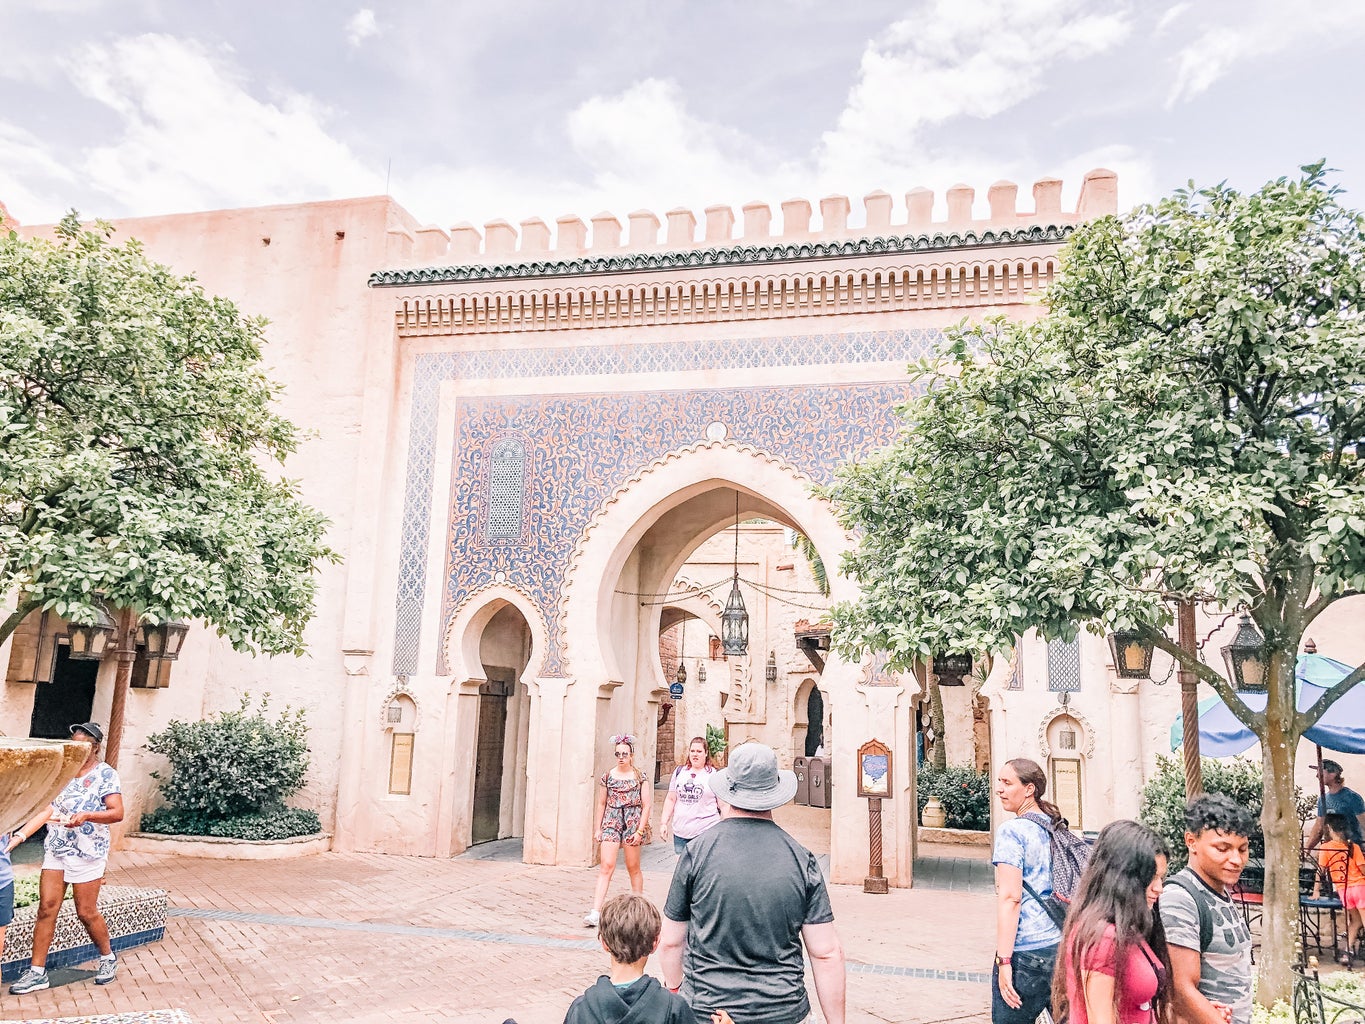 Morocco Pavilion at EPCOT